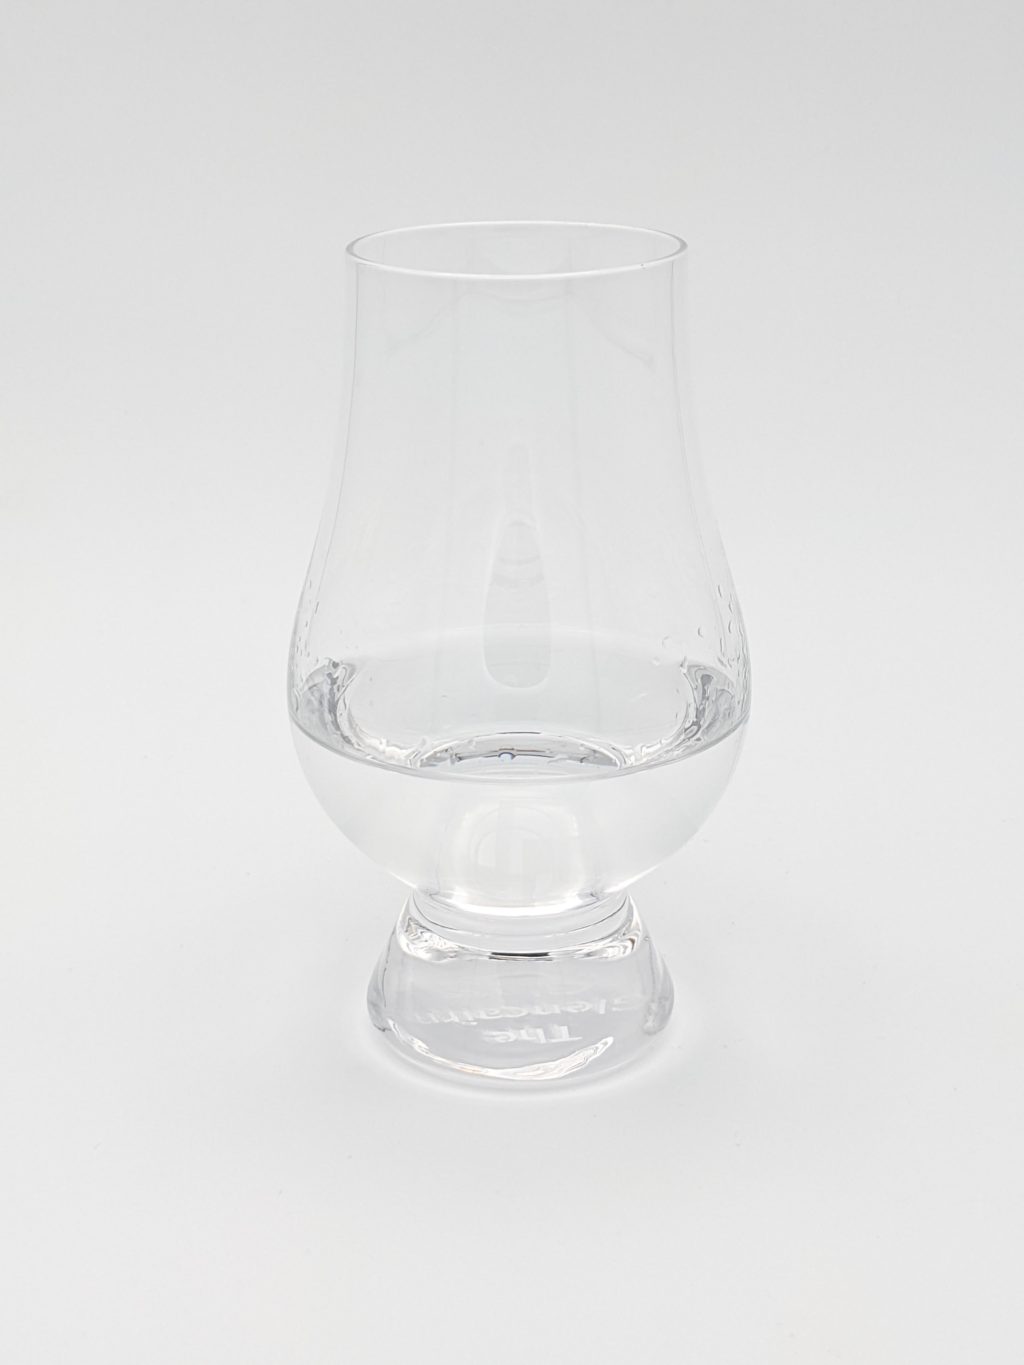 Clear Liquid in a glencairn Glass